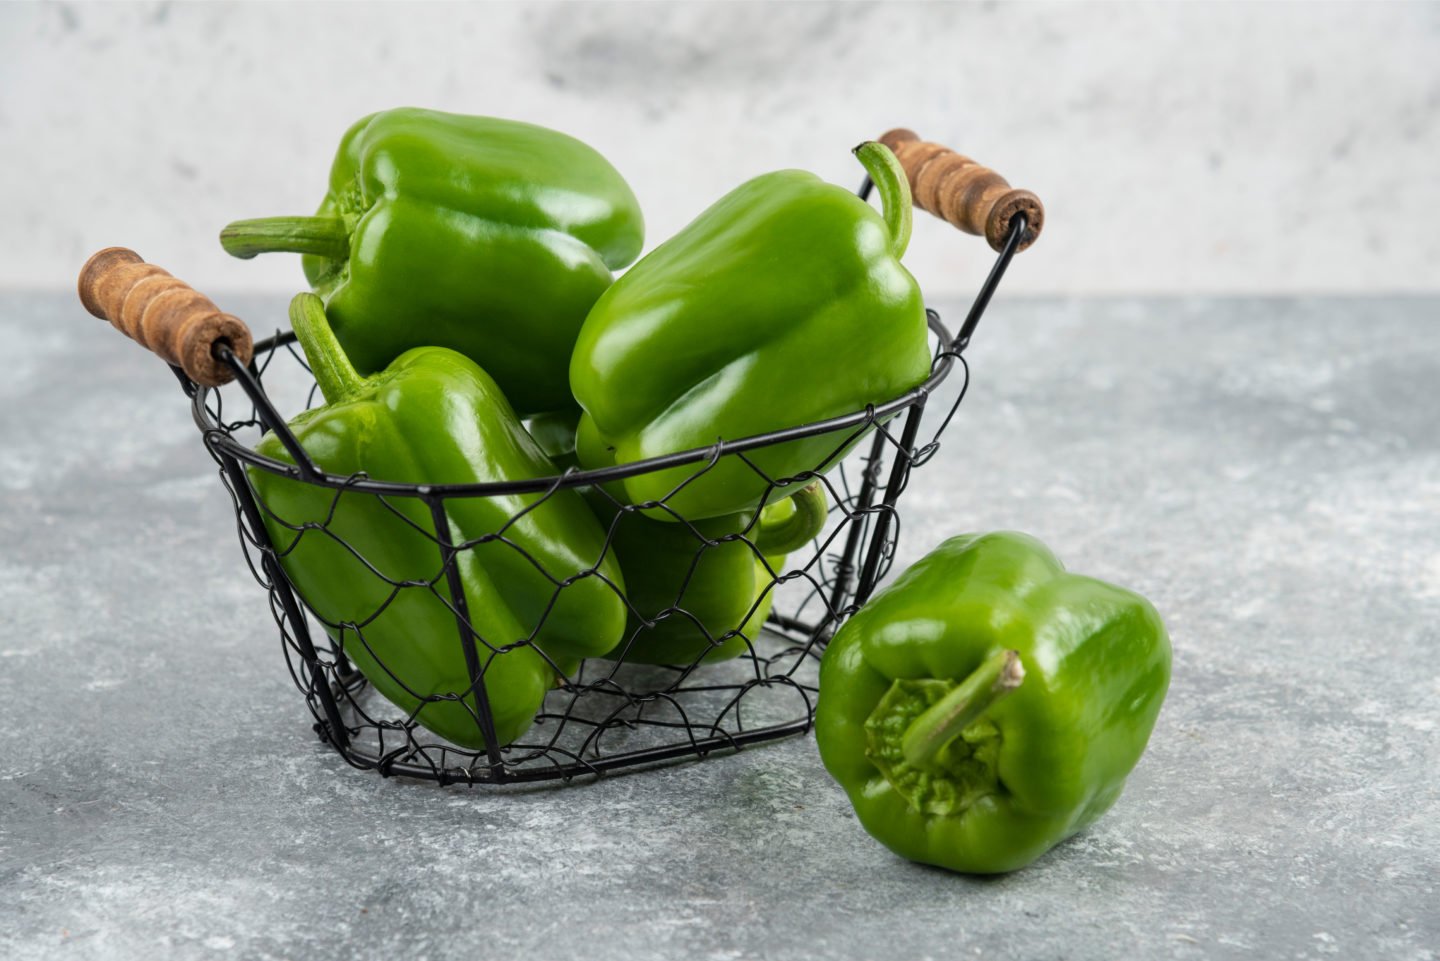 green bell pepper as a green onion substitute